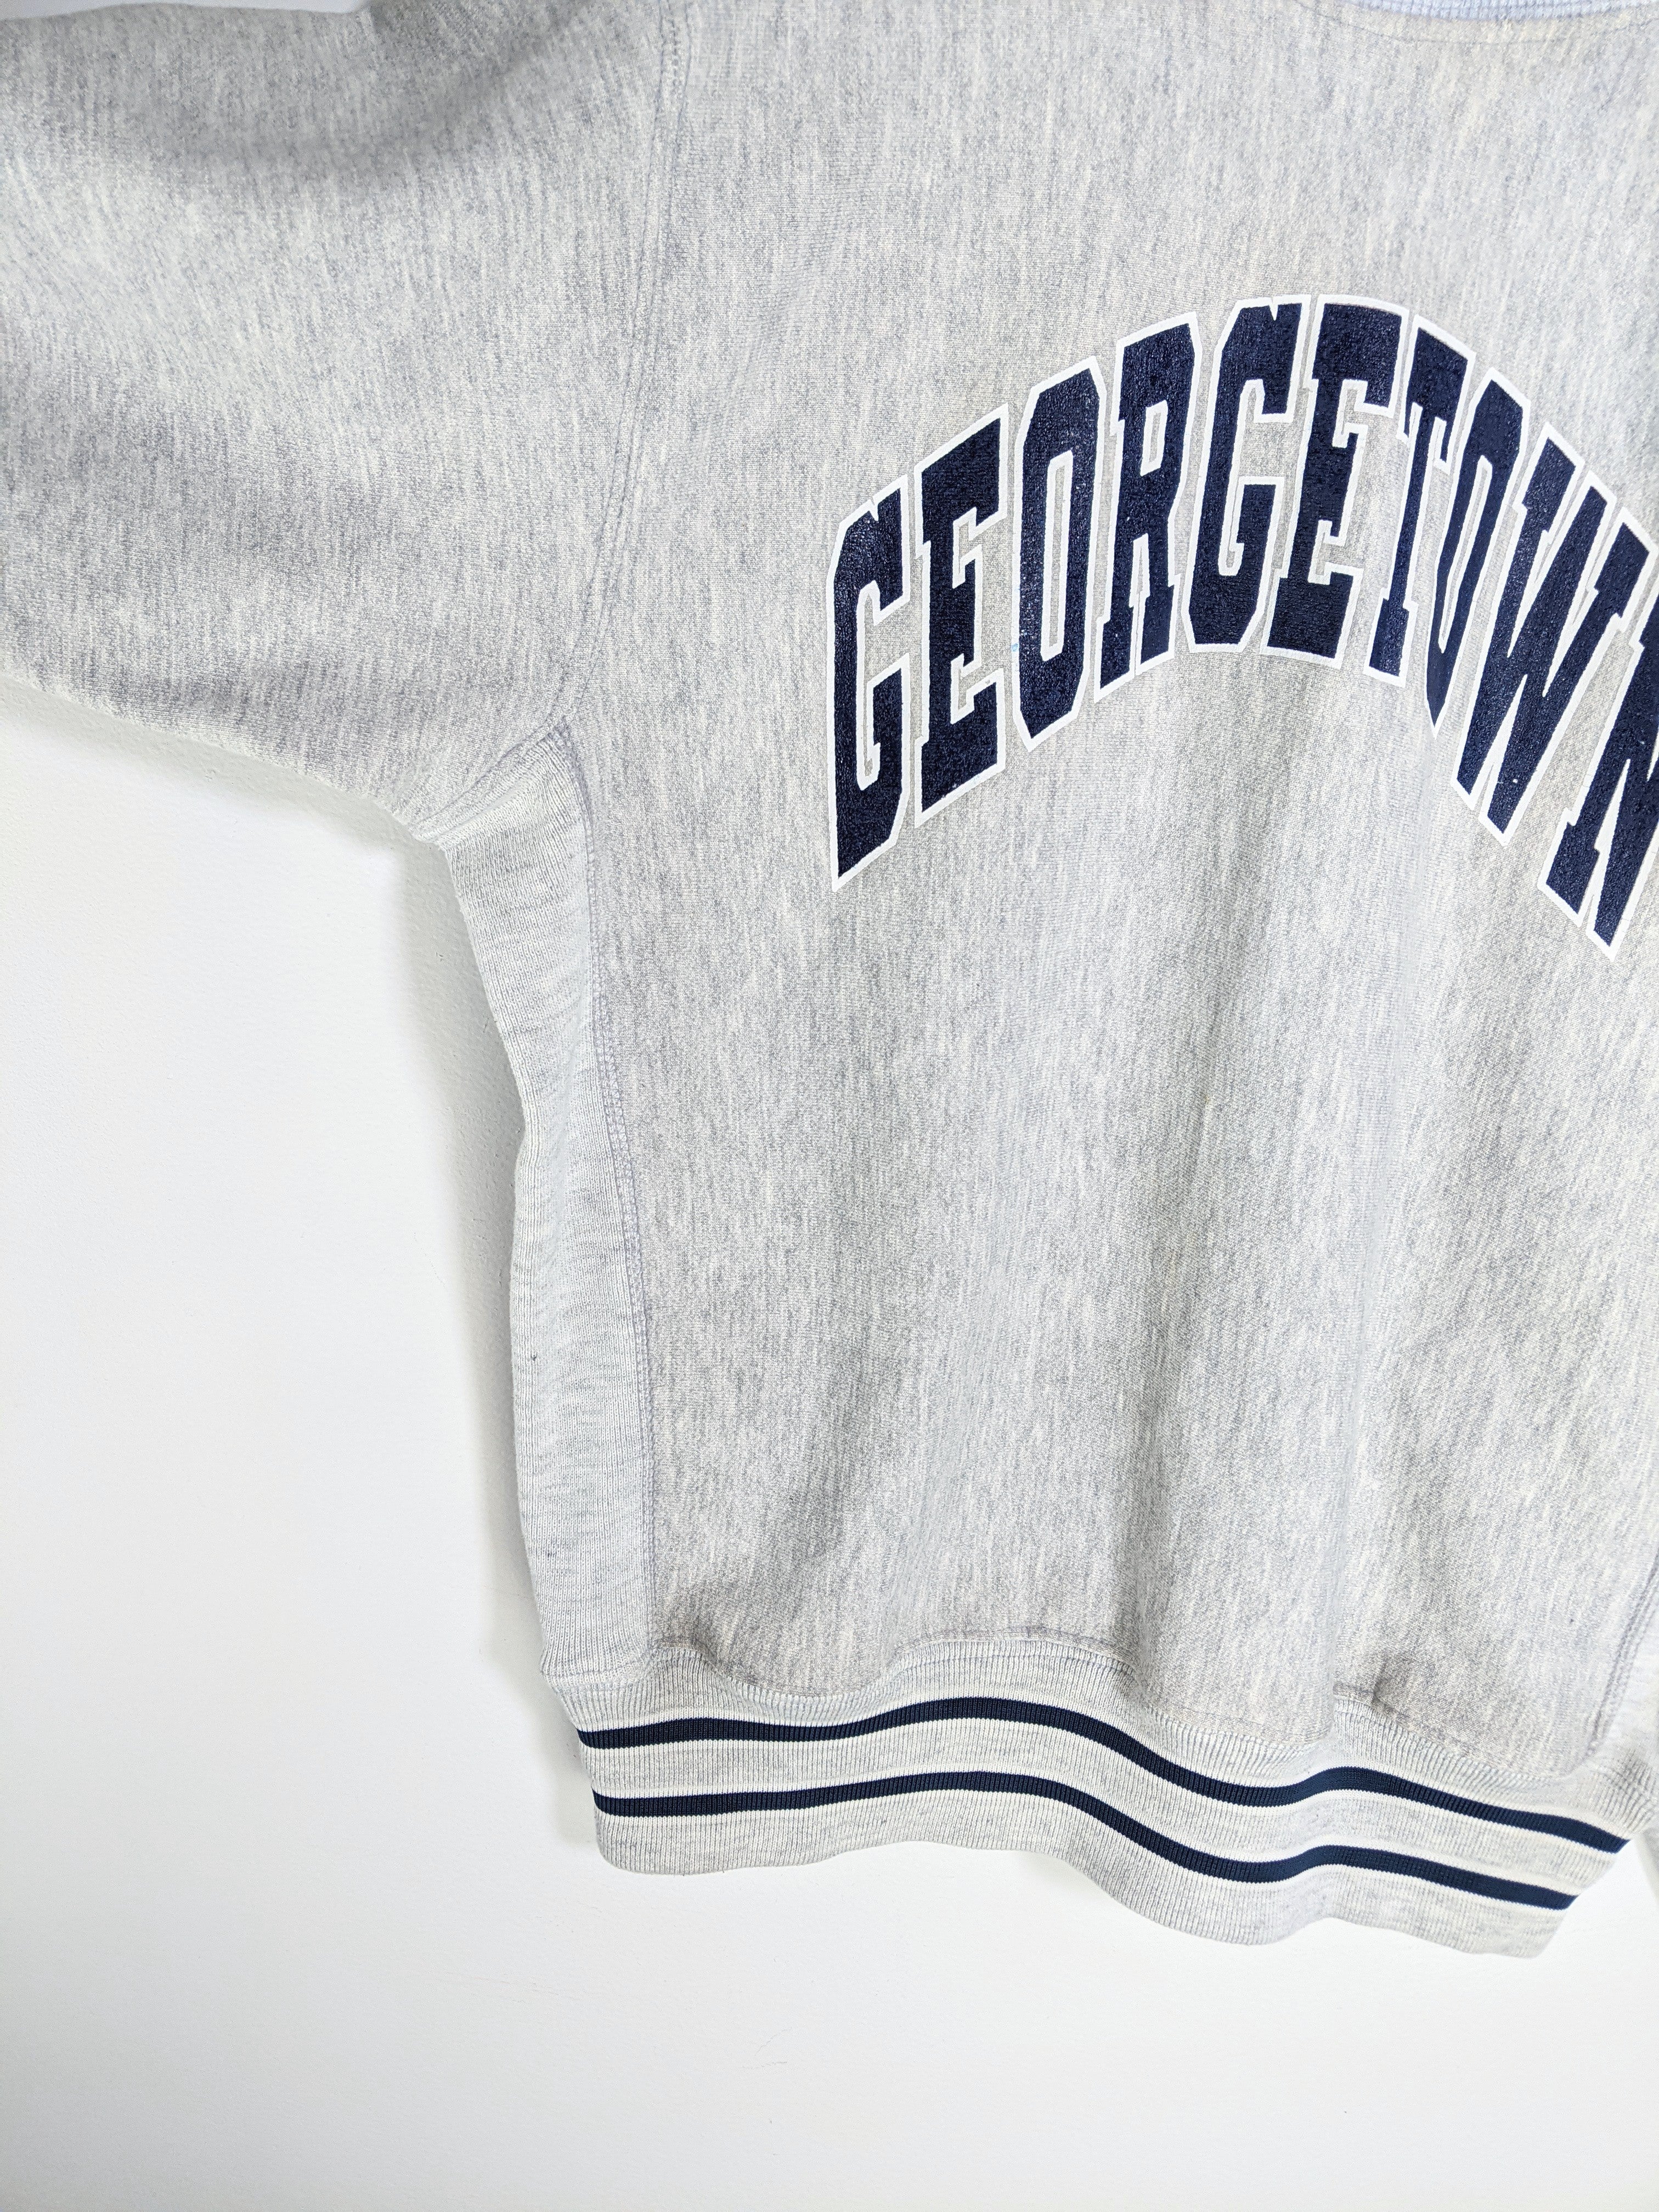 Georgetown University Sweatshirt (M)